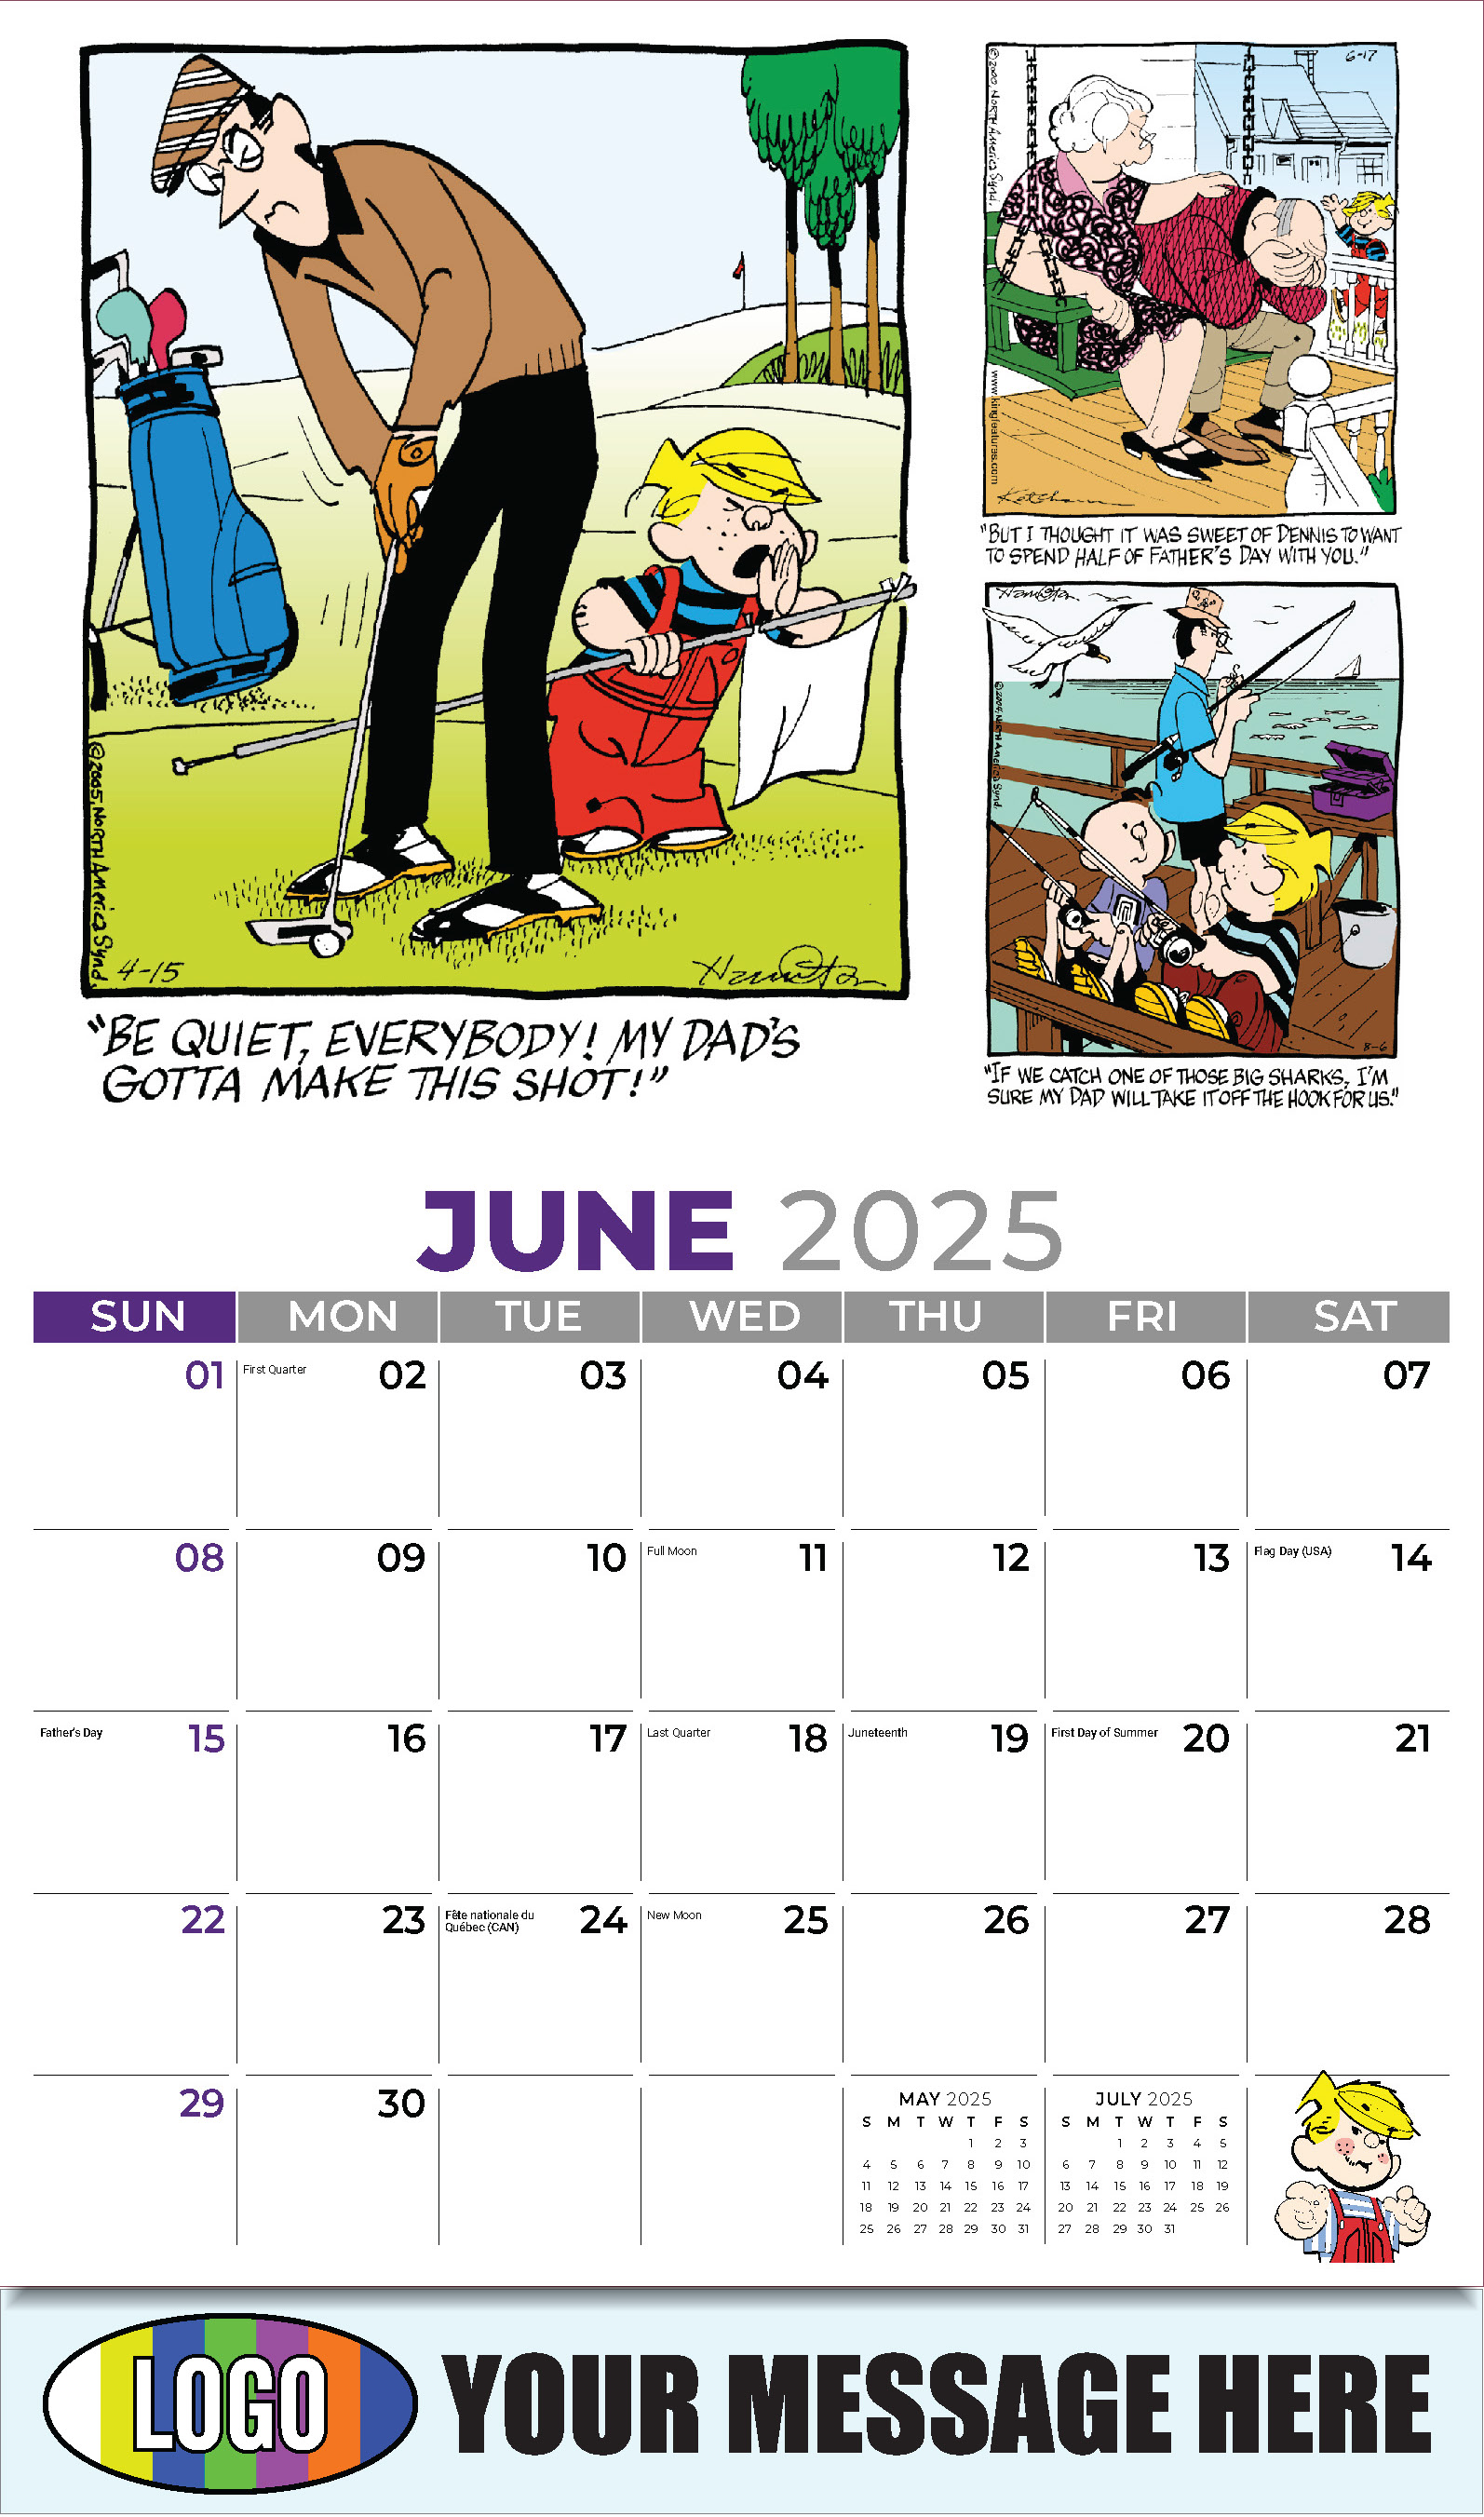 Dennis the Menace 2025 Business Promotional Wall Calendar - June